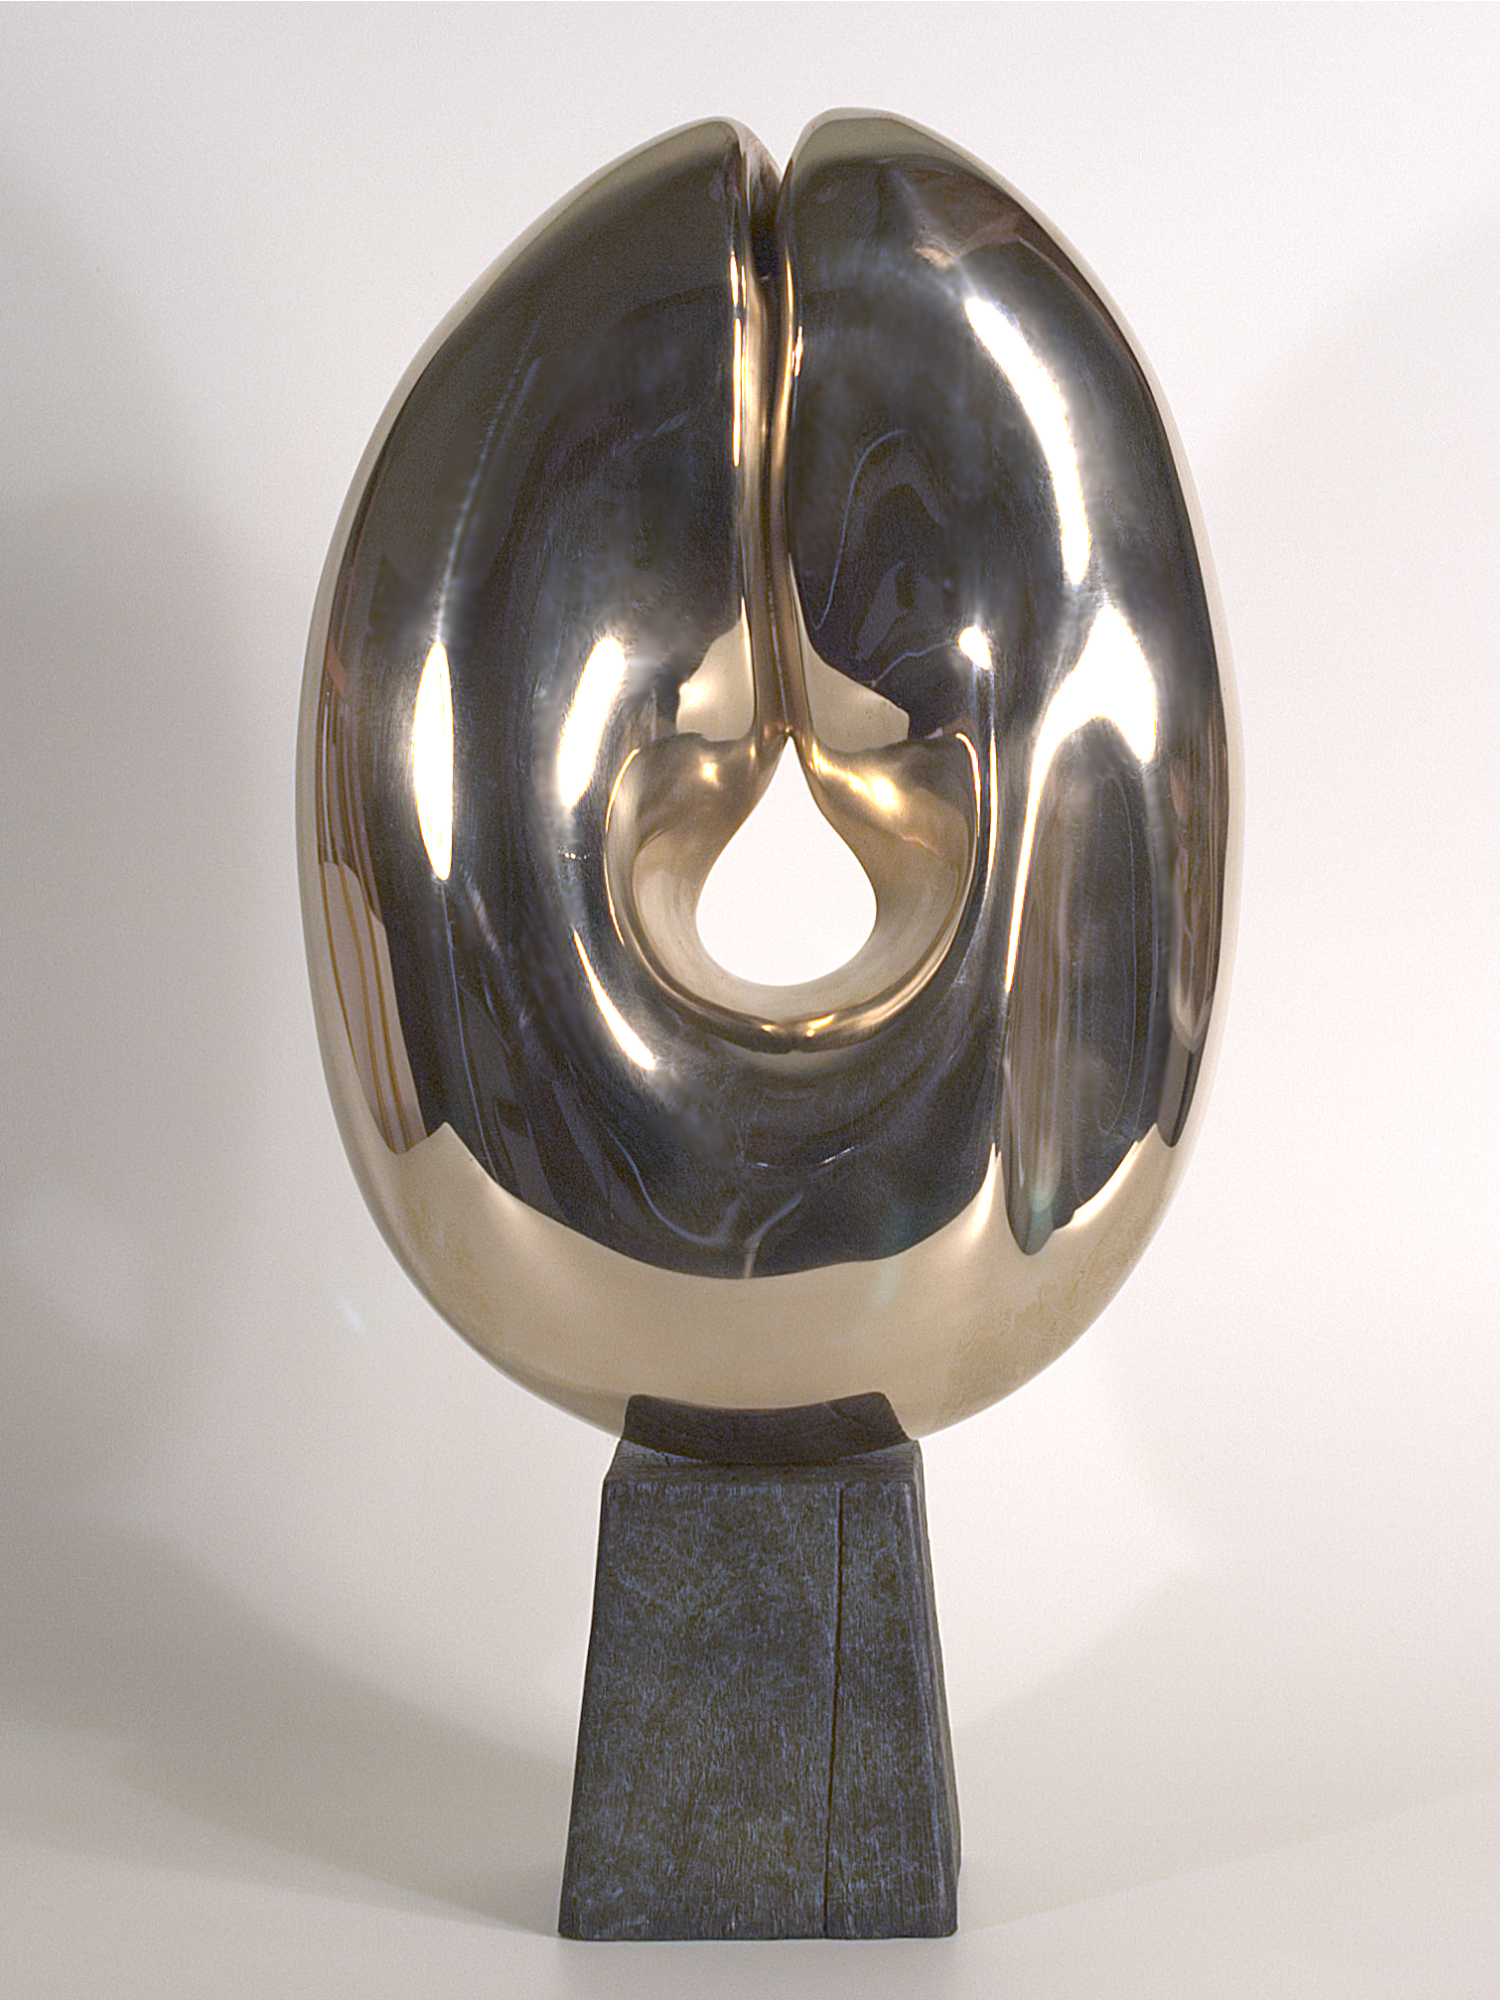 She #1. Modern bronze sculpture by Steve Howlett. 2013